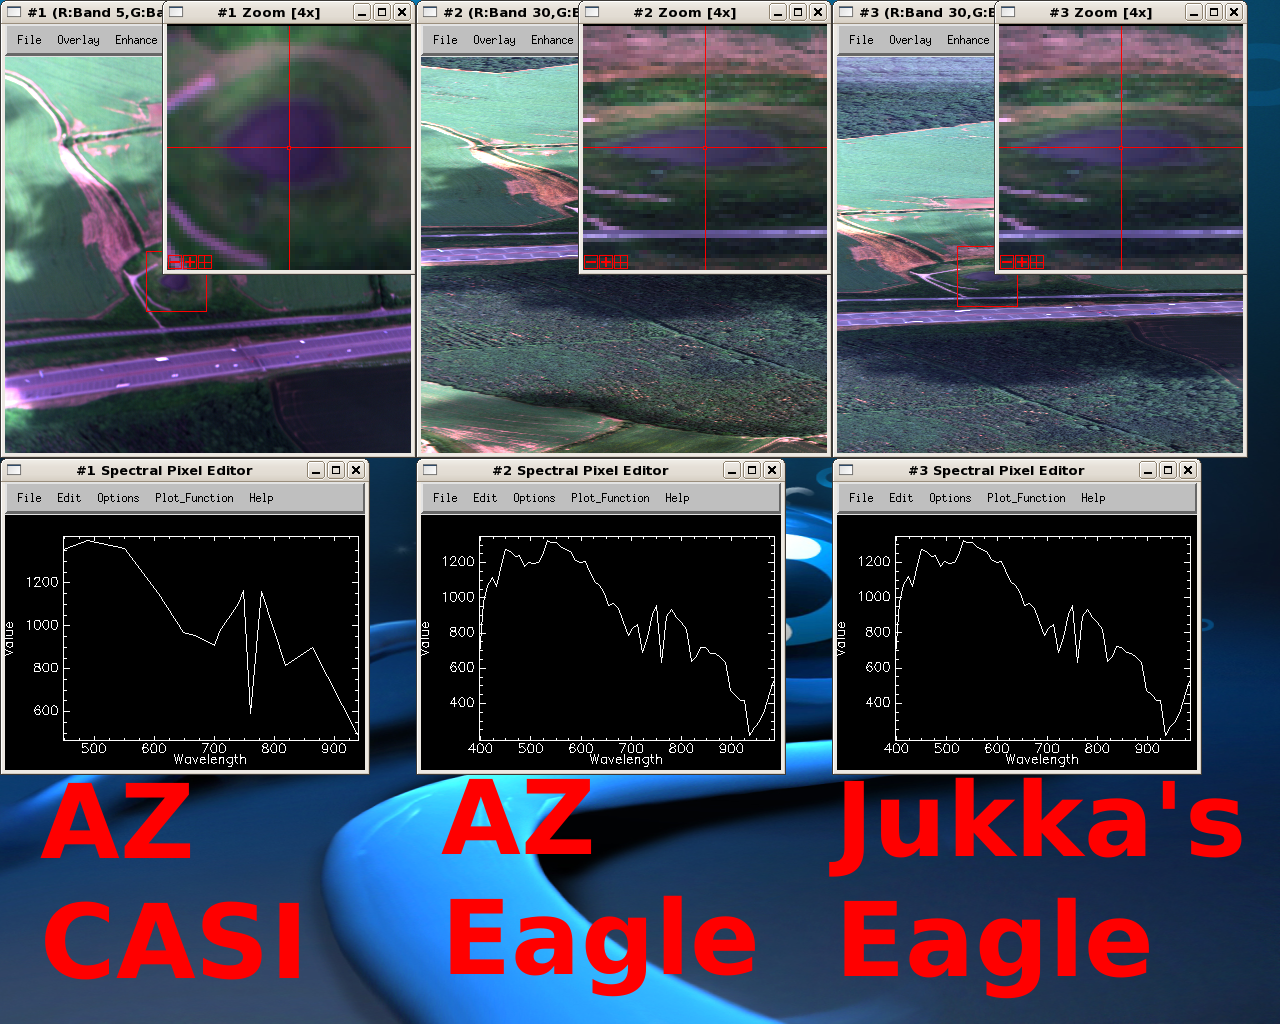 AZ CASI vs. AZ Eagle vs. Jukka Eagle - using updated azspec